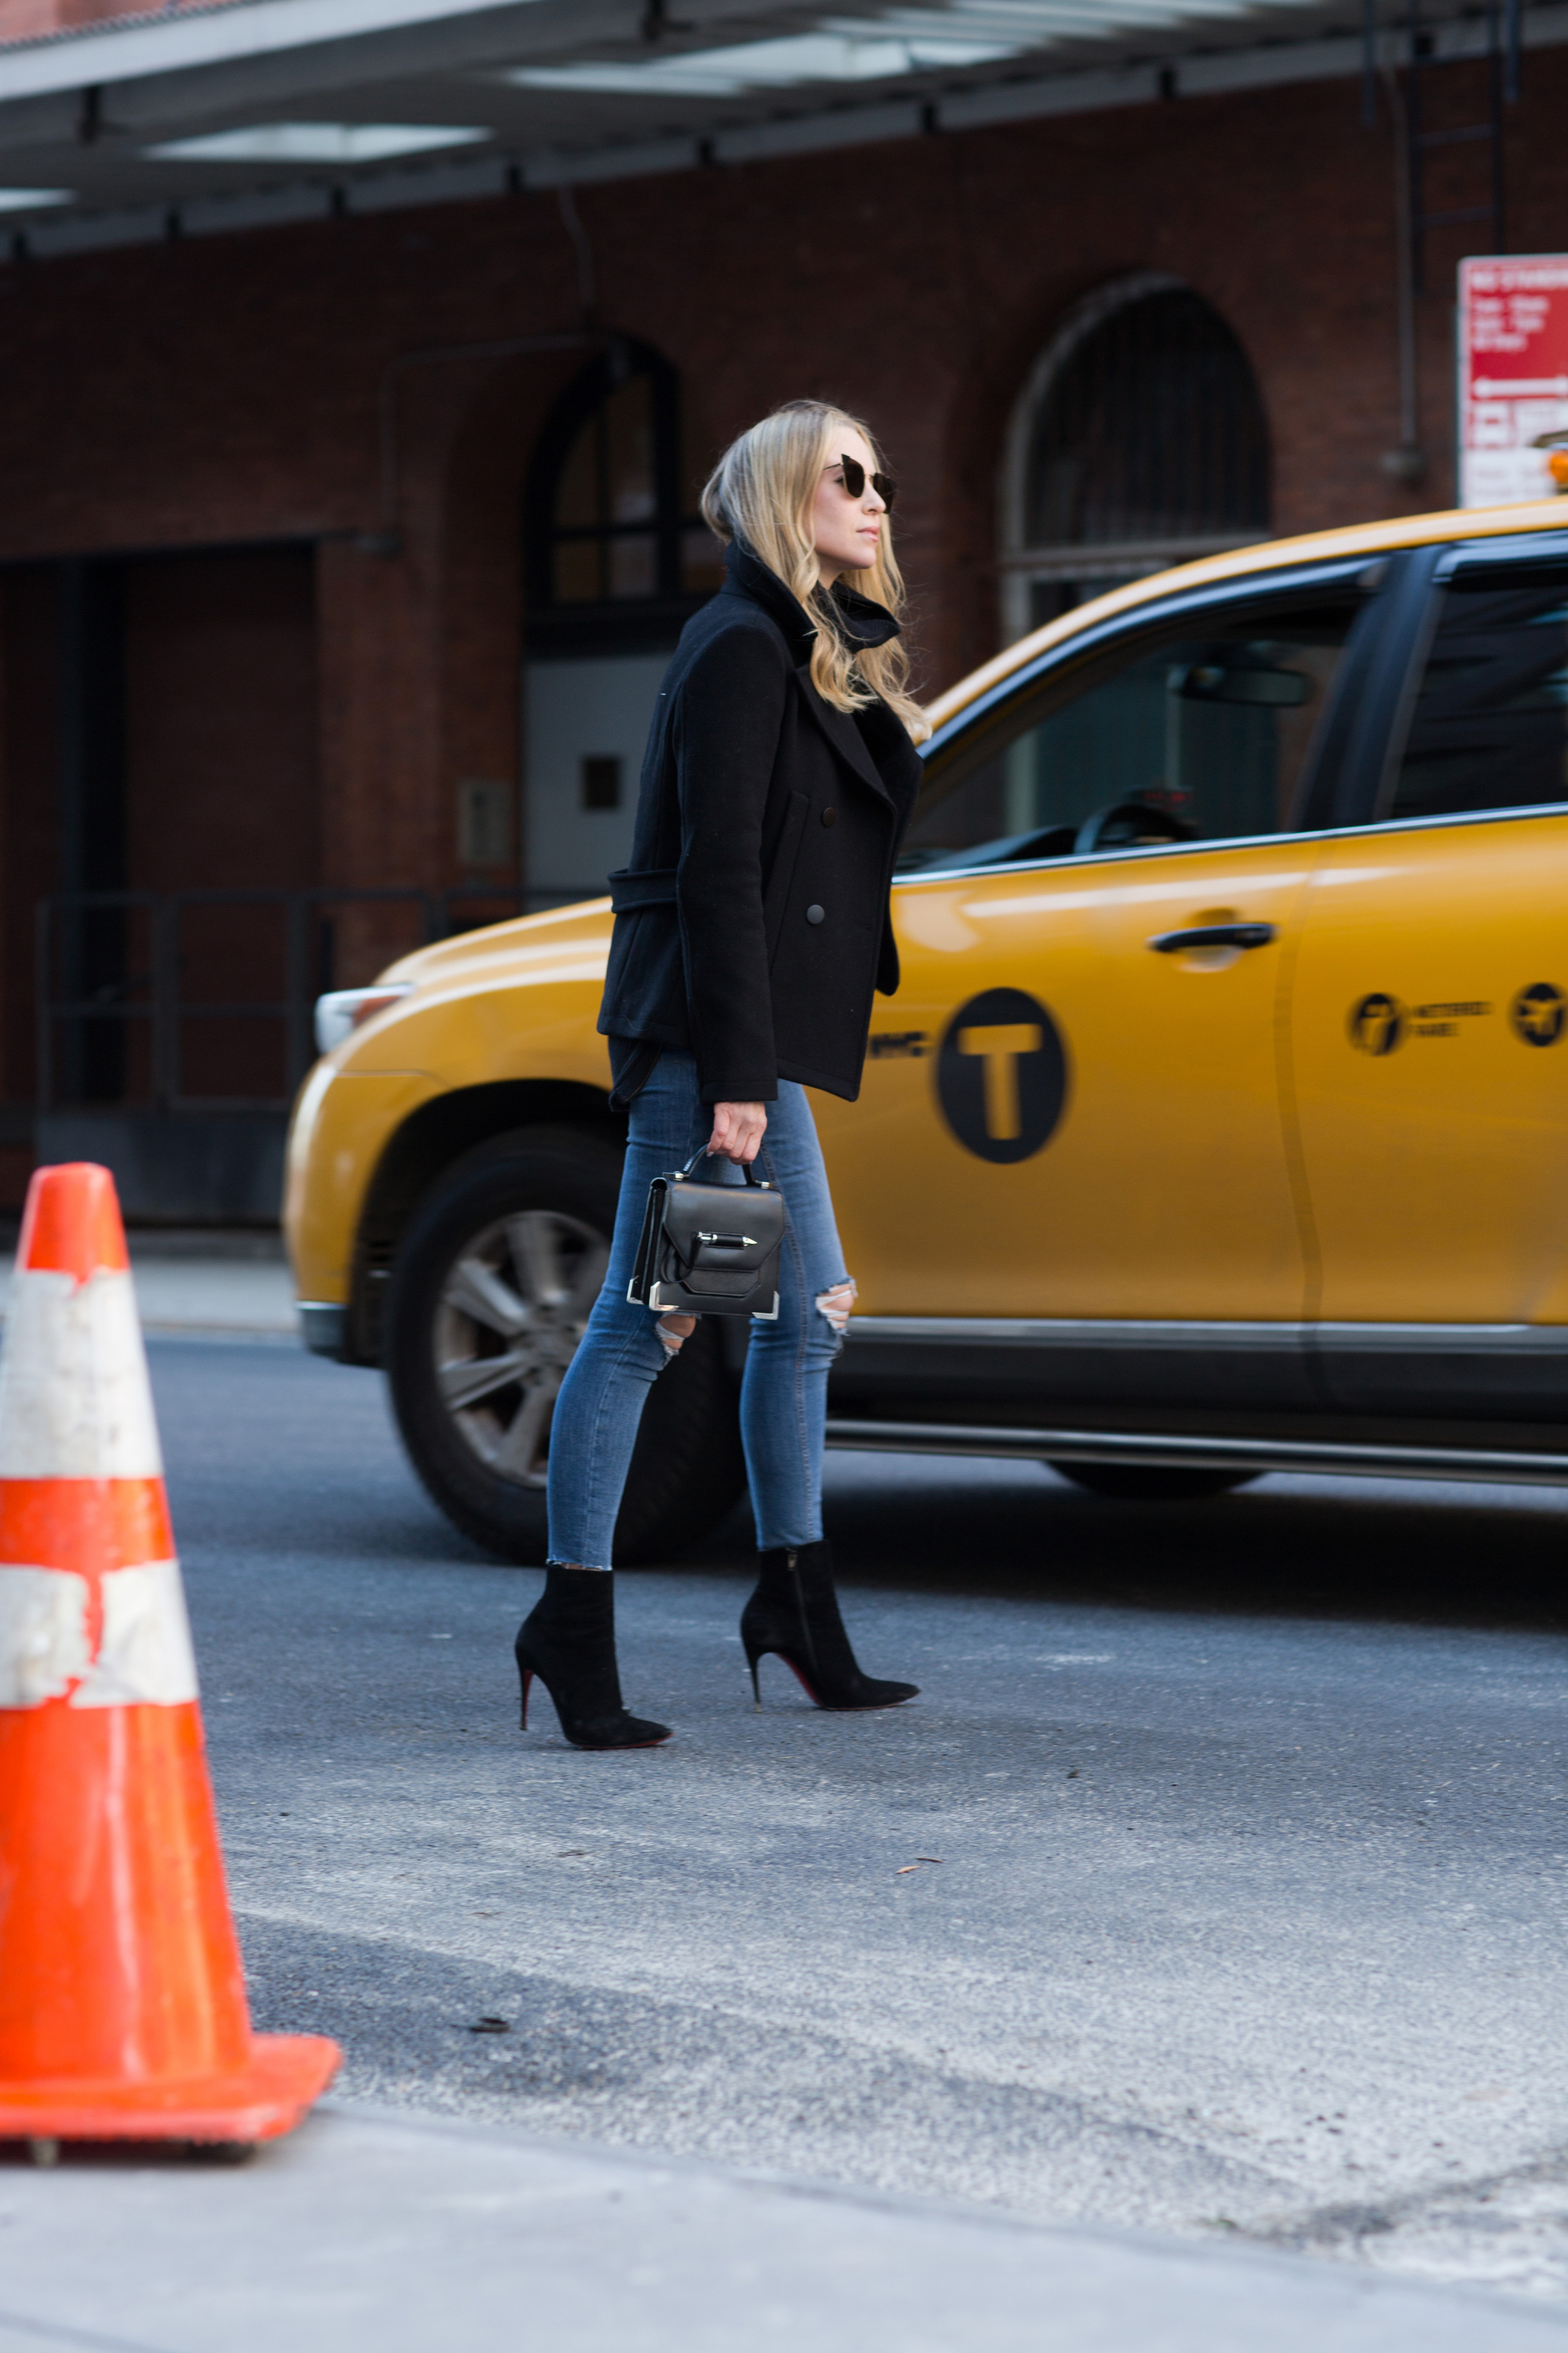 winter work day outfits inspiration - Helena Glazer of Brooklyn Blonde wearing Slate & Stone black Peacoat with black turtleneck sweater, distressed denim, Louboutin boots, Fendi Sunglasses, and Mackage handbag